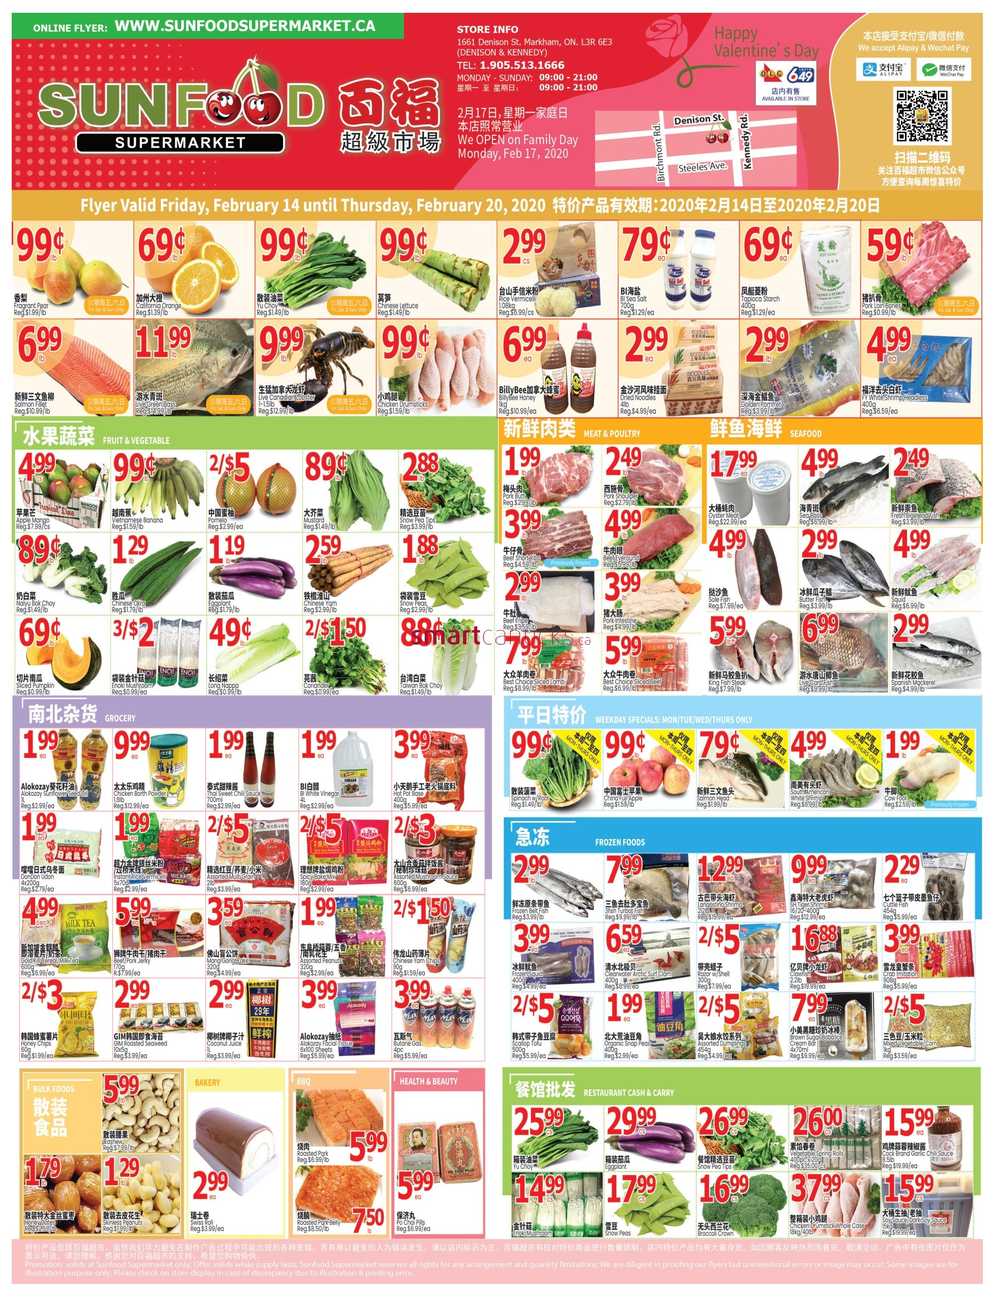 Sunfood Supermarket Flyer February 14 to 20